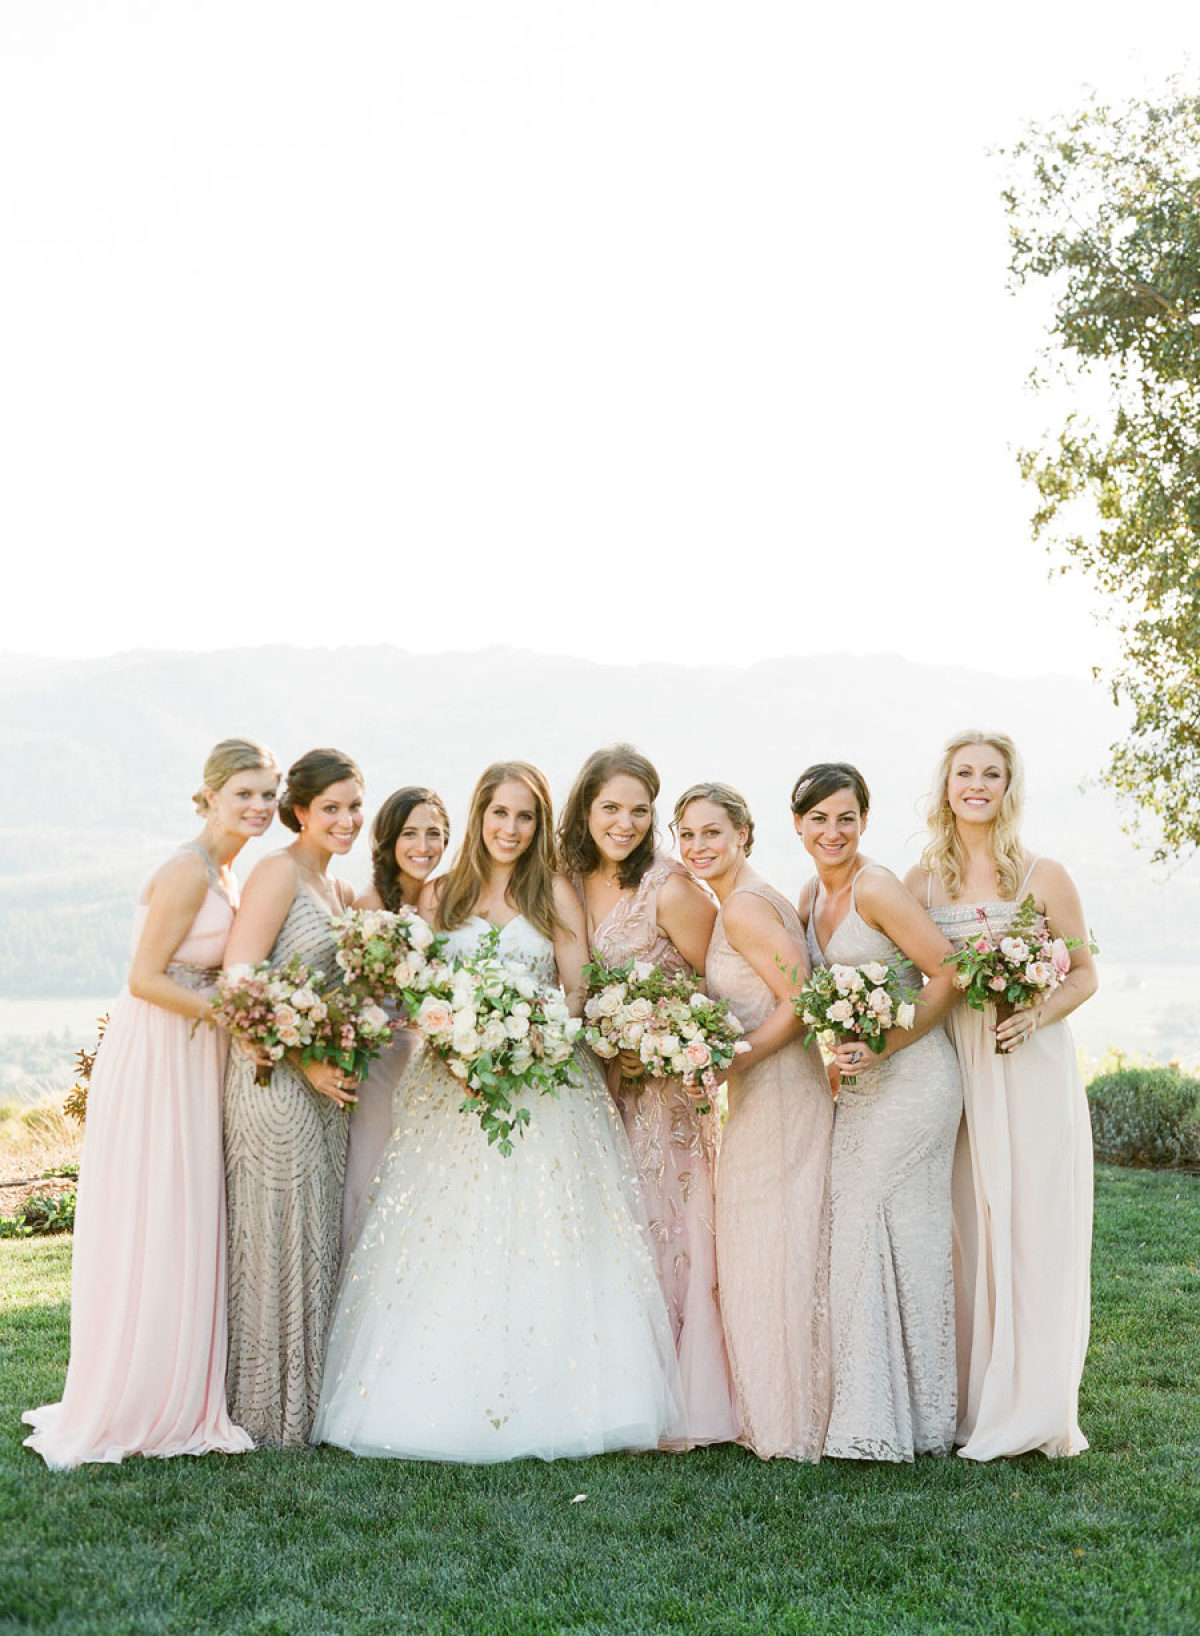 Look Back on 15 Gorgeous Lauren Conrad Wedding Pictures